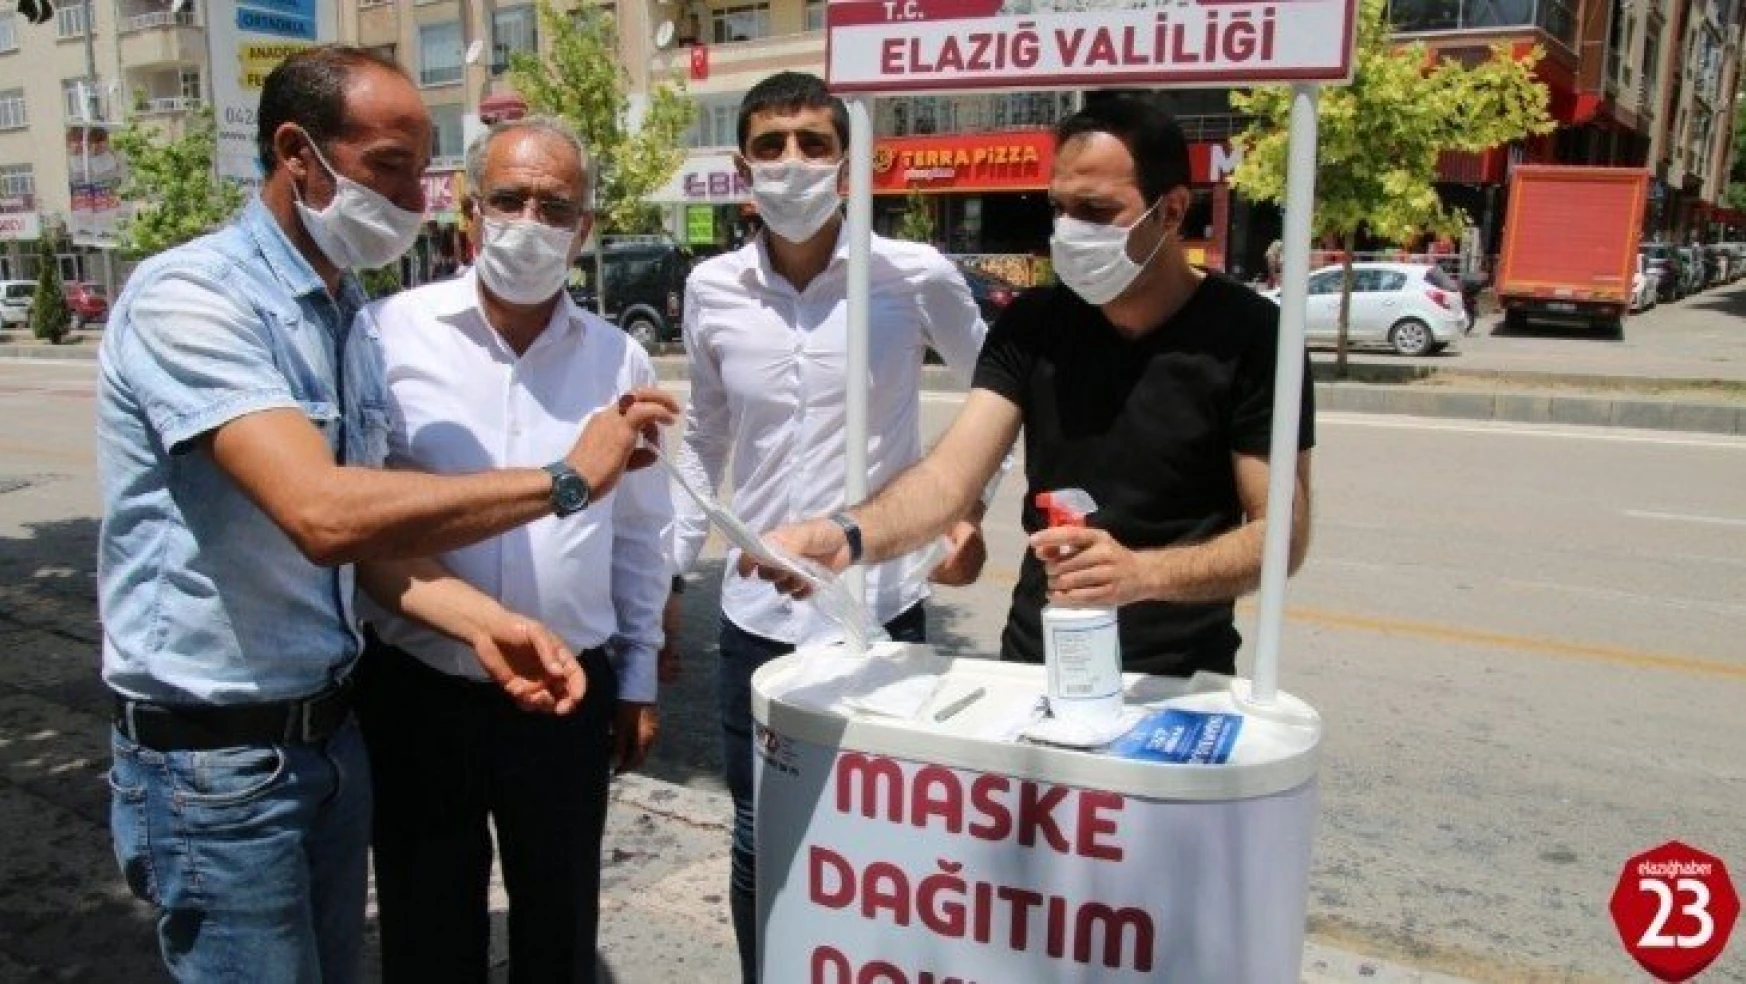 Elazığ'da vatandaşa maske hizmeti